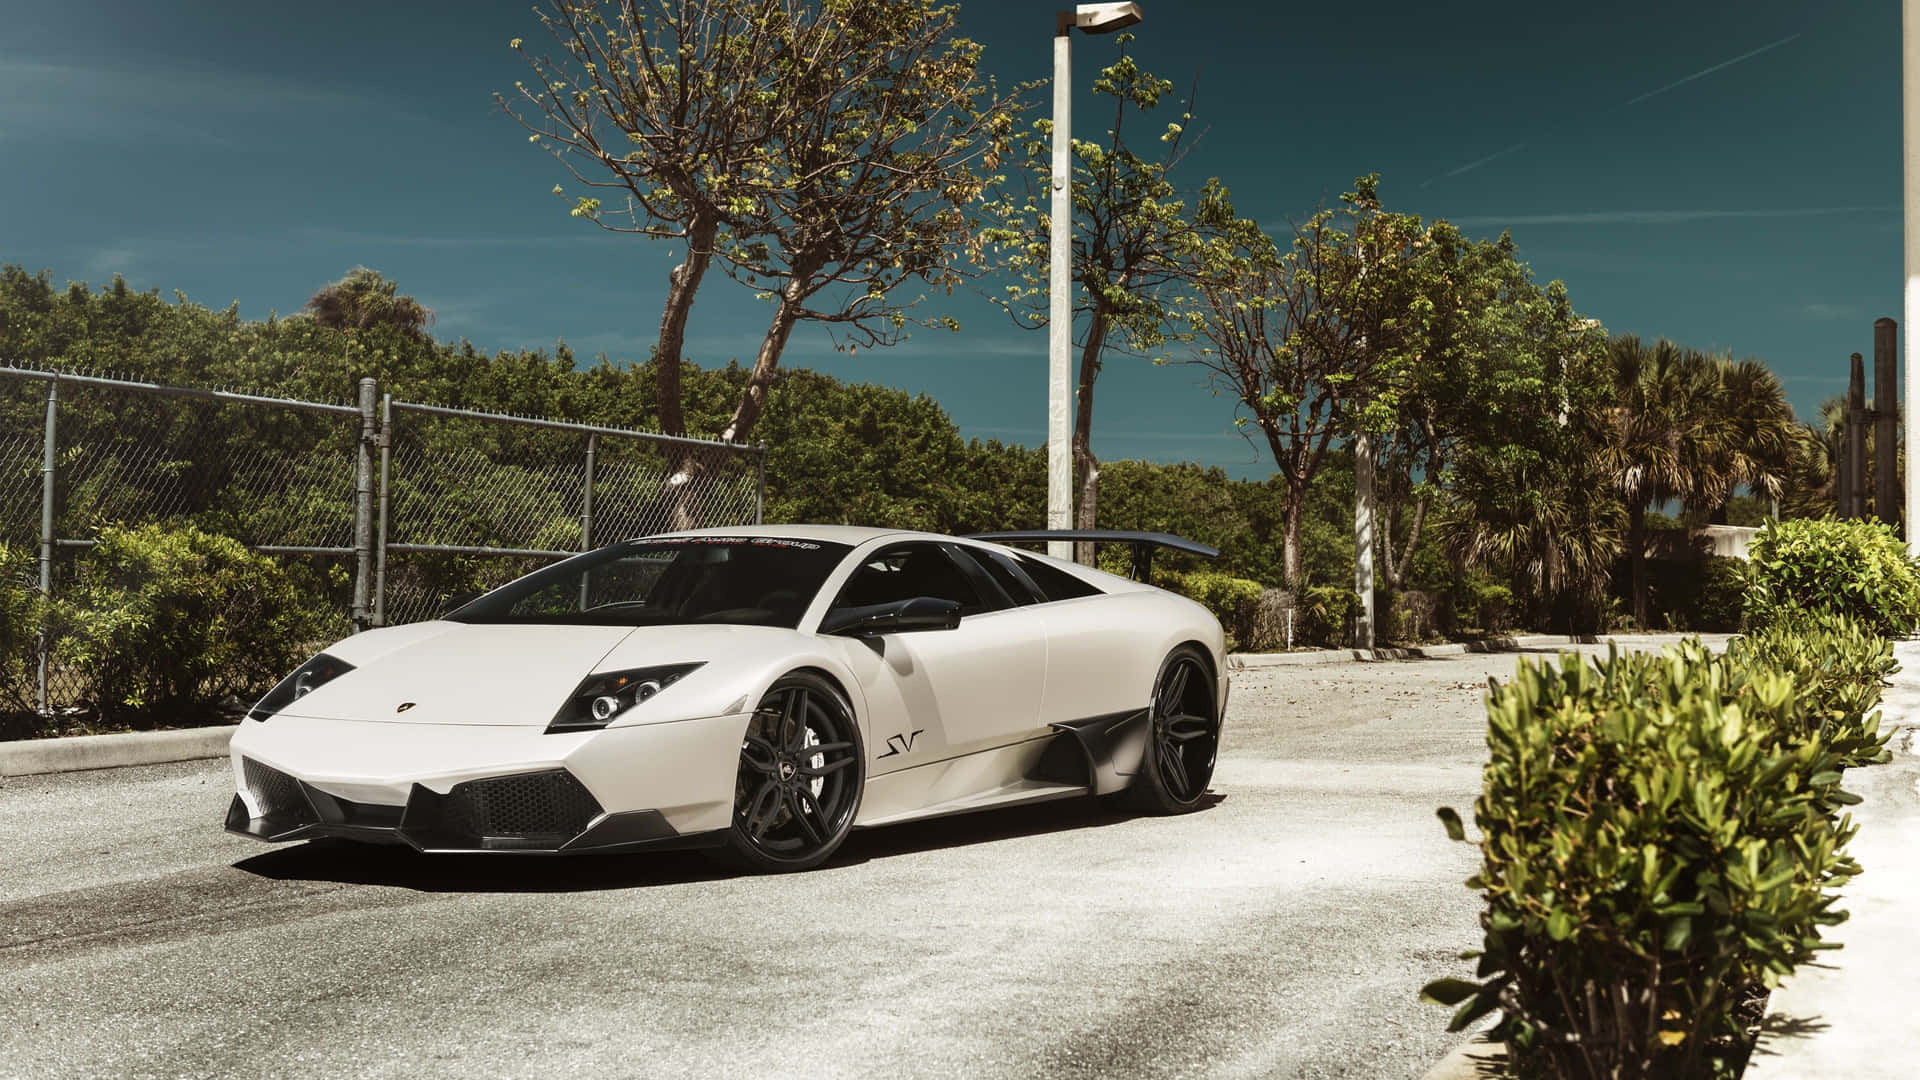 Lamborghini Murciélago in Captivating Landscape Wallpaper